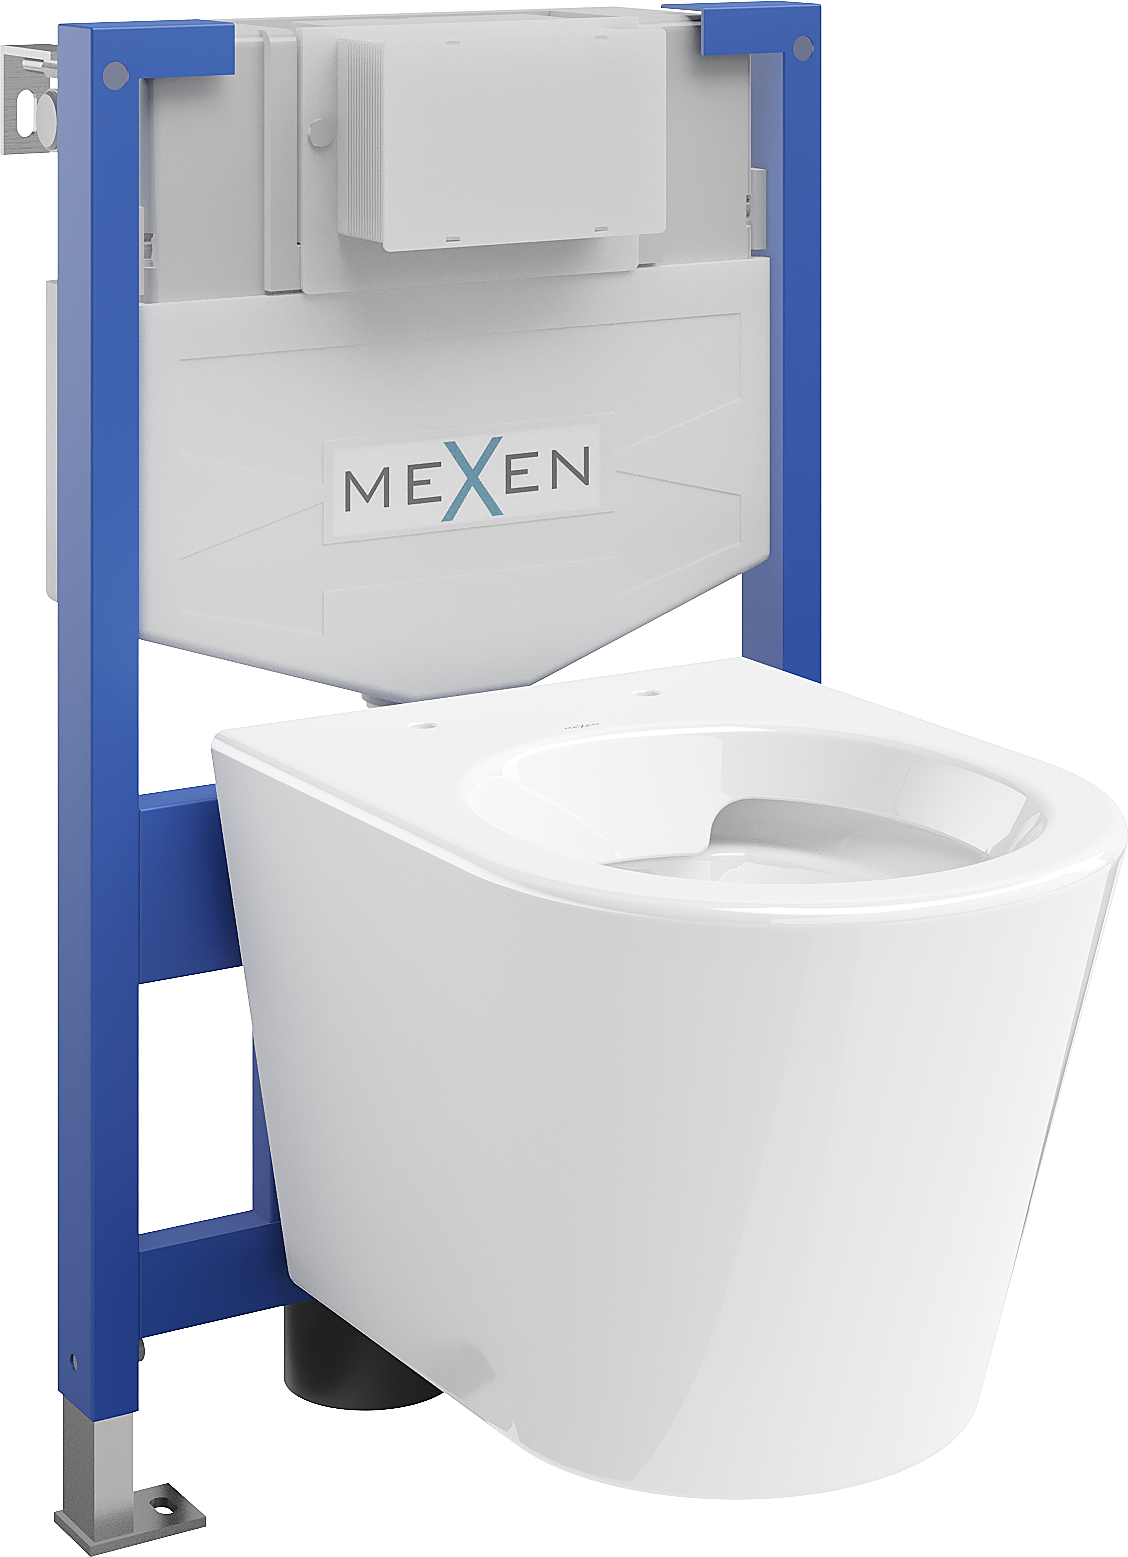 Mexen podomietkový WC systém Felix XS-F s WC misou Rico, biela- 6803372XX00